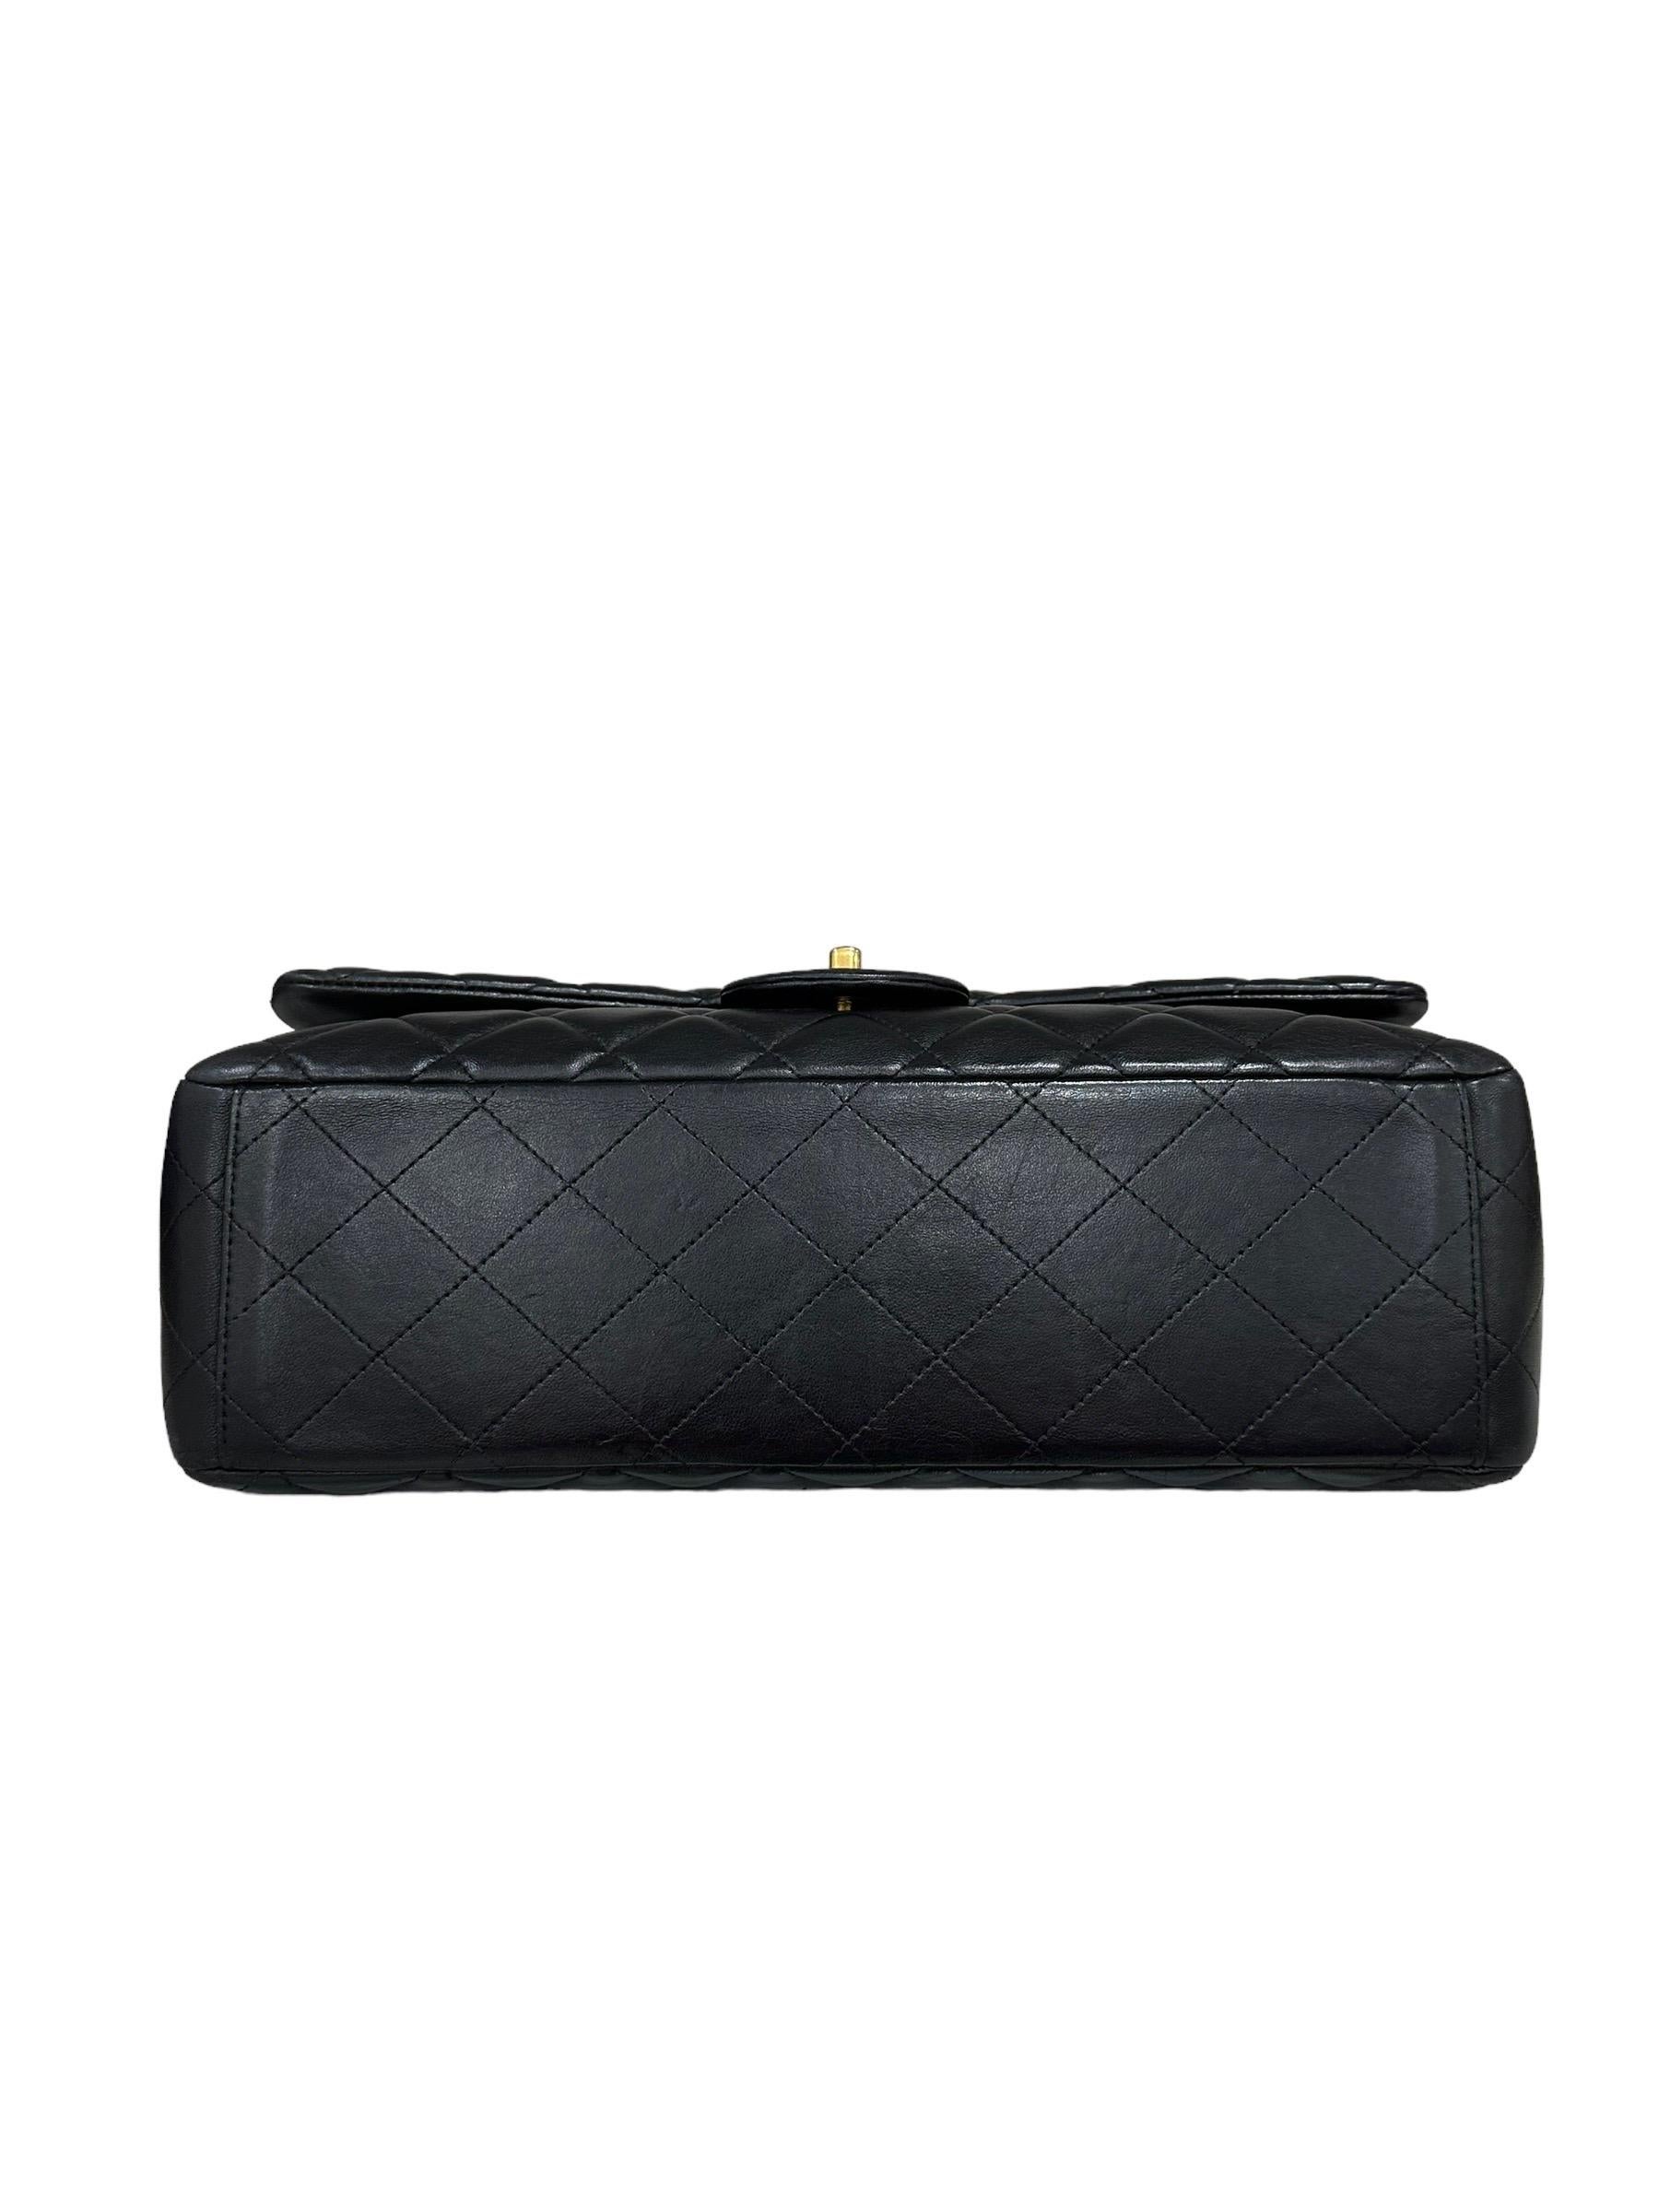 2011 Chanel Timeless Maxi Jumbo Black Leather Top Shoulder Bag 5